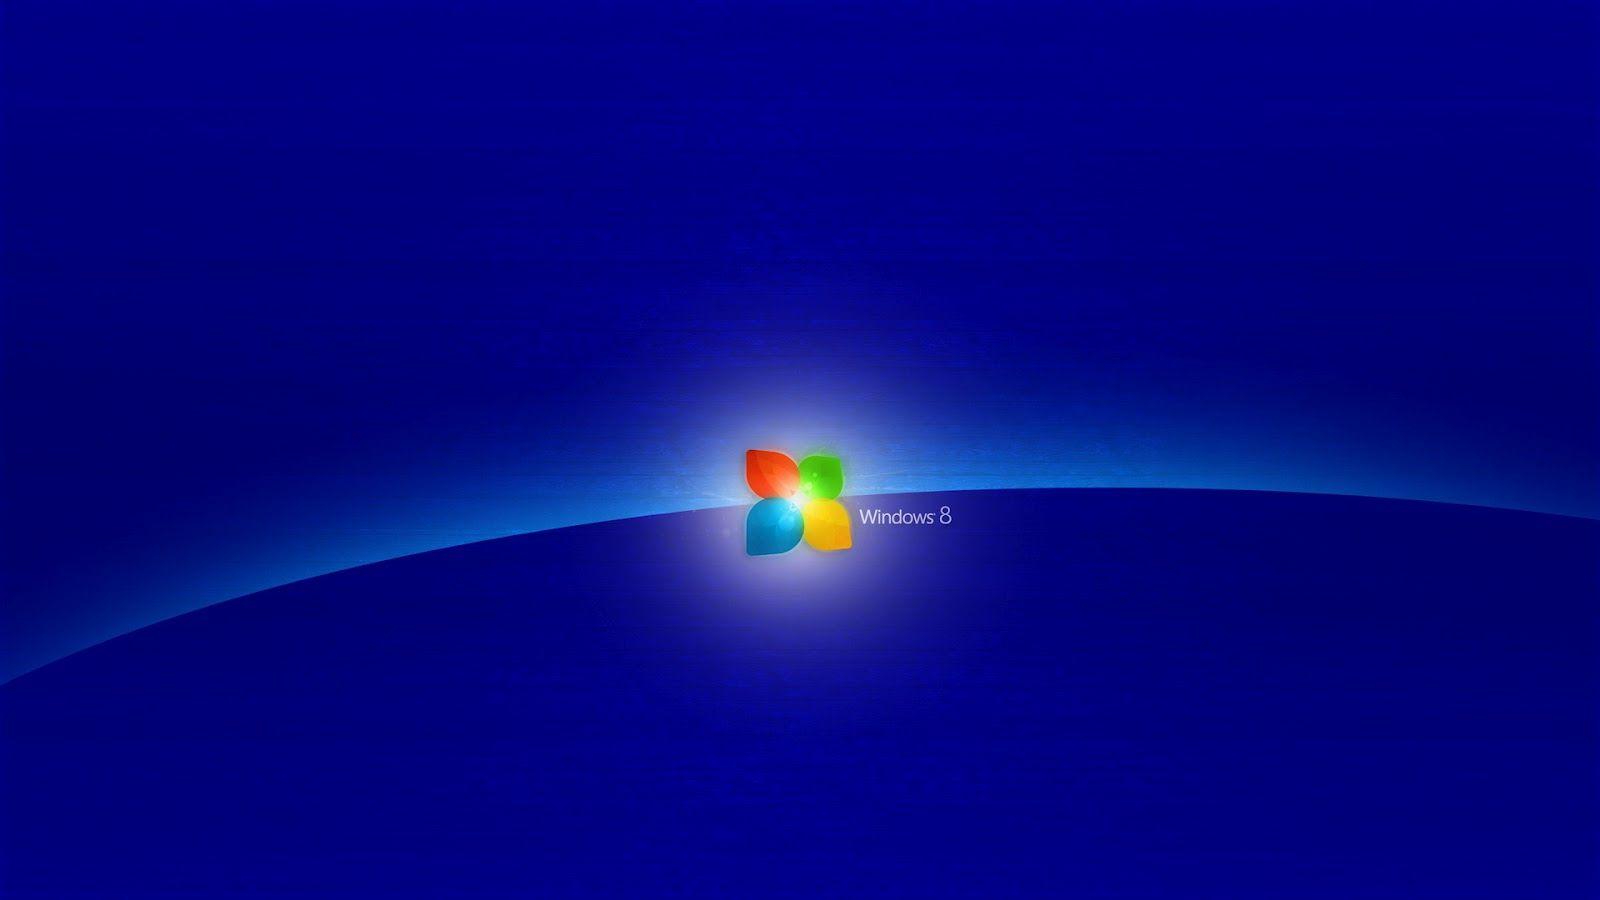 Windows 8 HD 1080p Wallpaper Part 2. Free HD Desktop Wallpaper